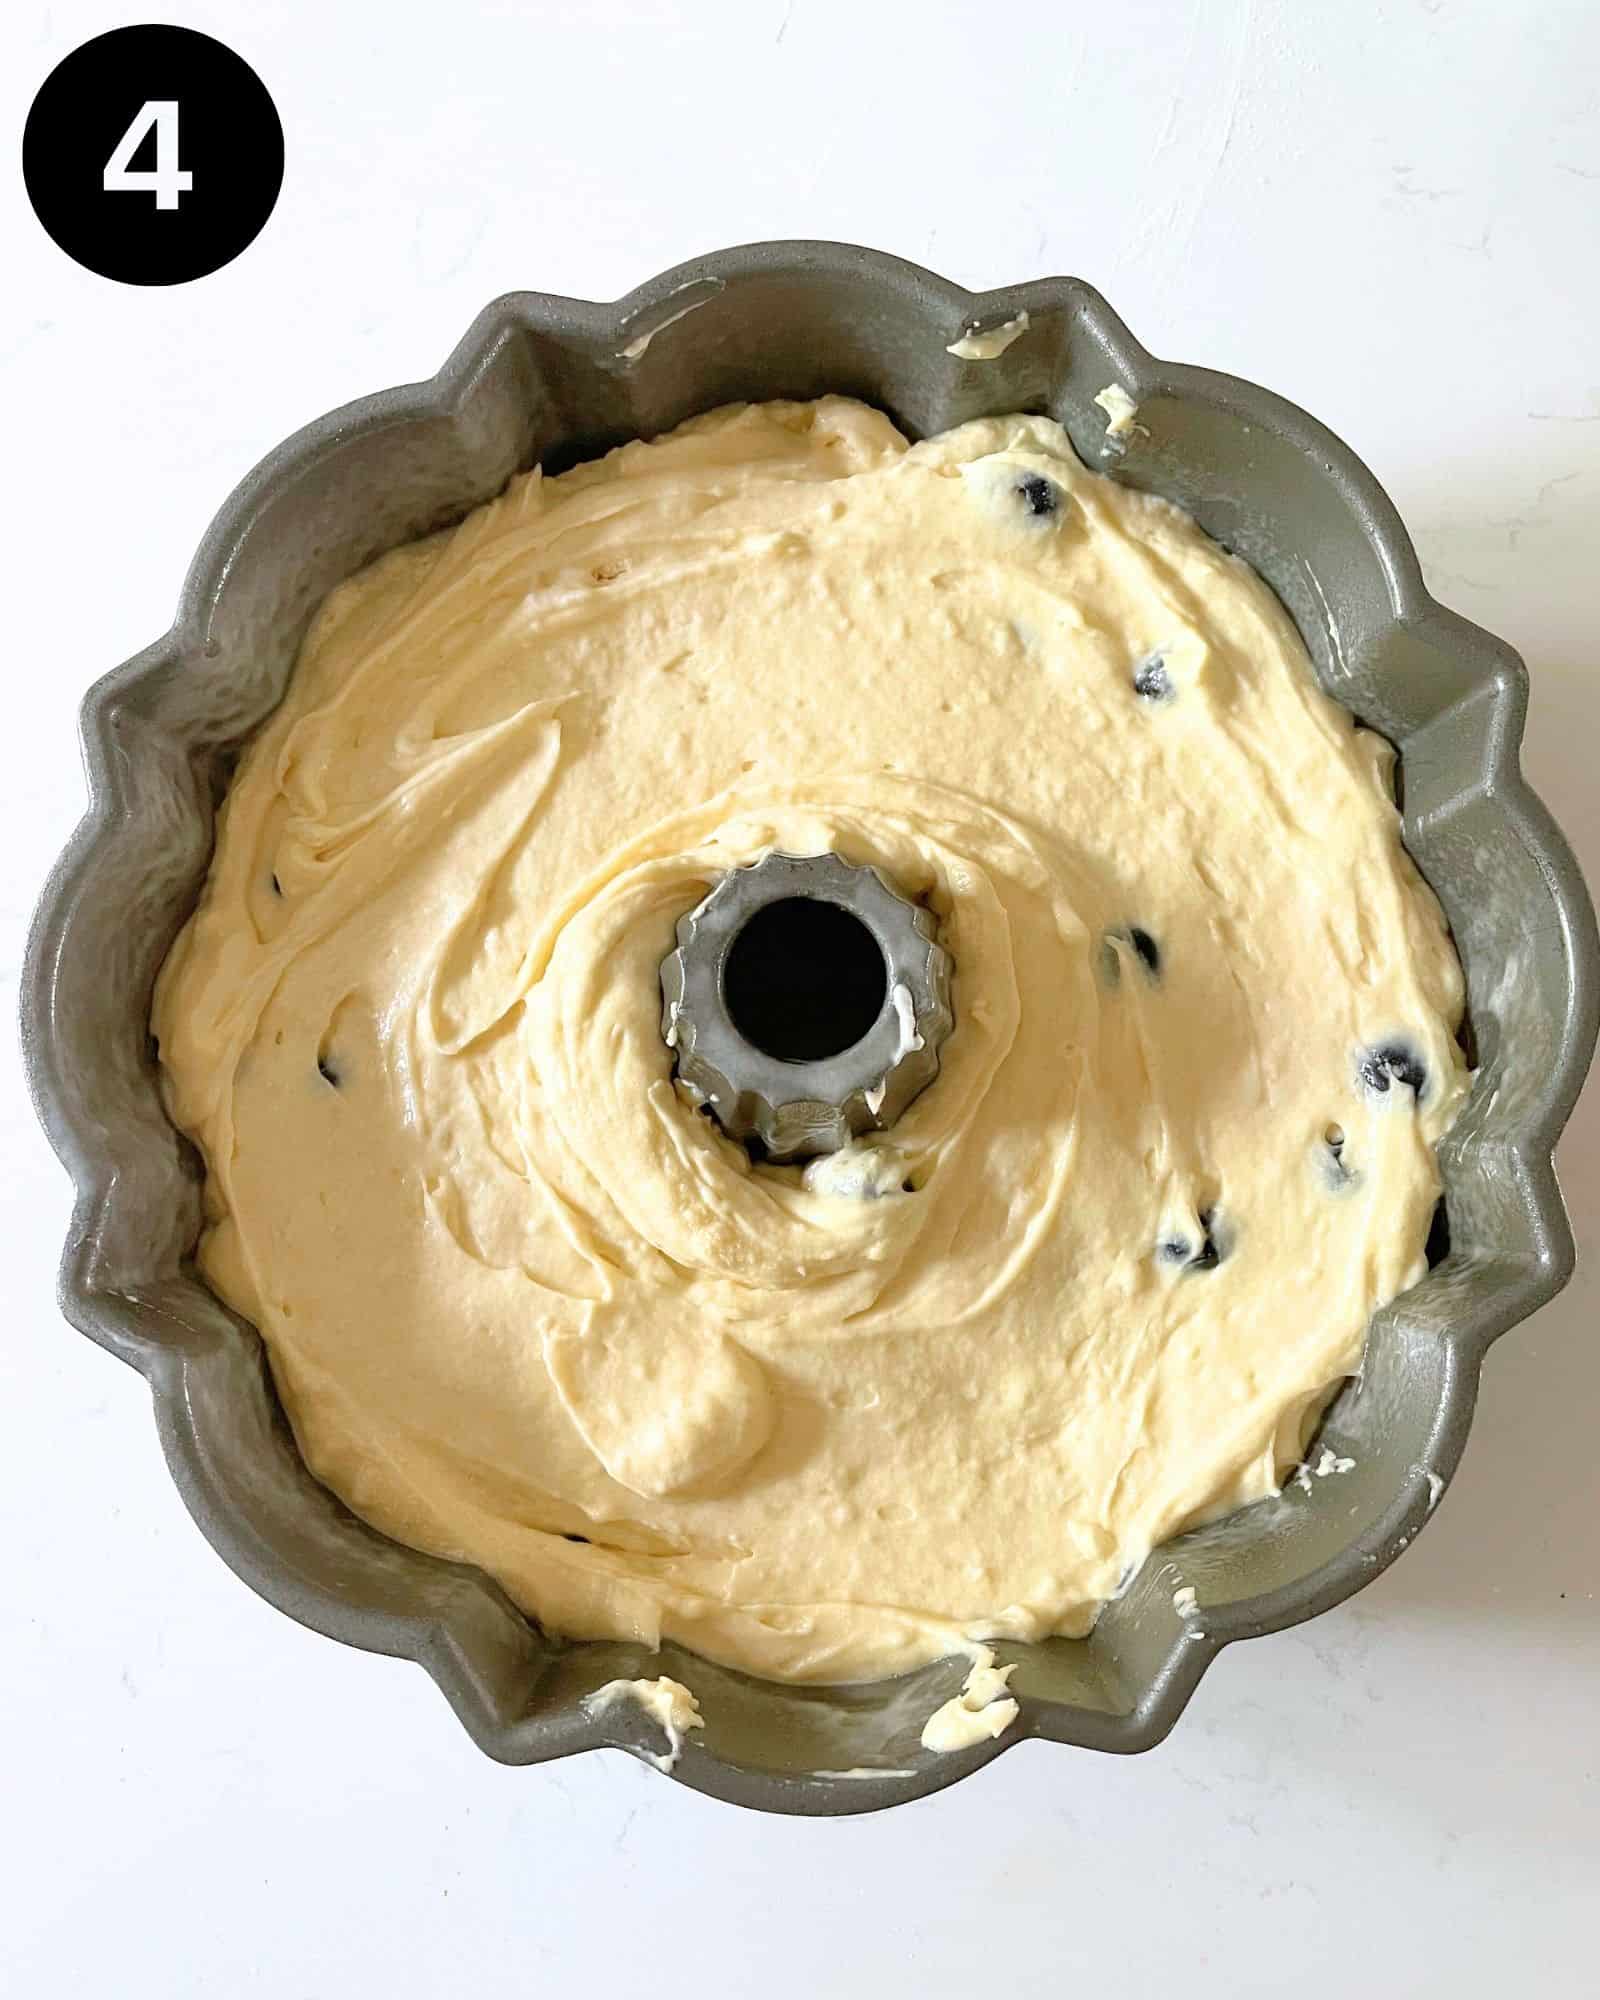 blueberry pound cake batter in a bundt pan.